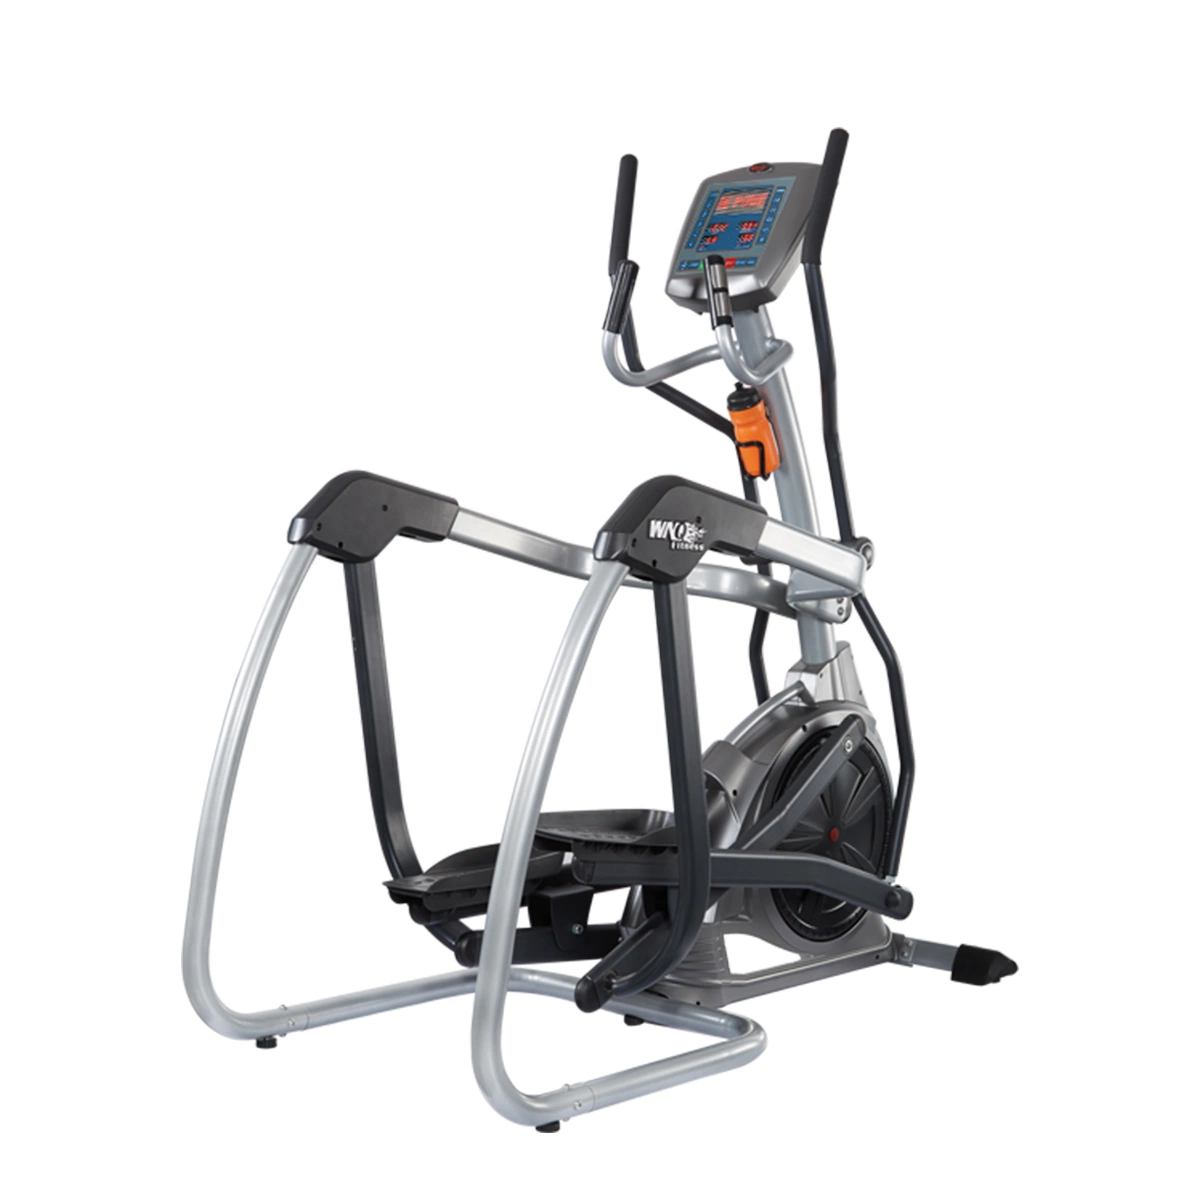 Elliptical /Cross Trainer Gym Machine for Semi-Commercial